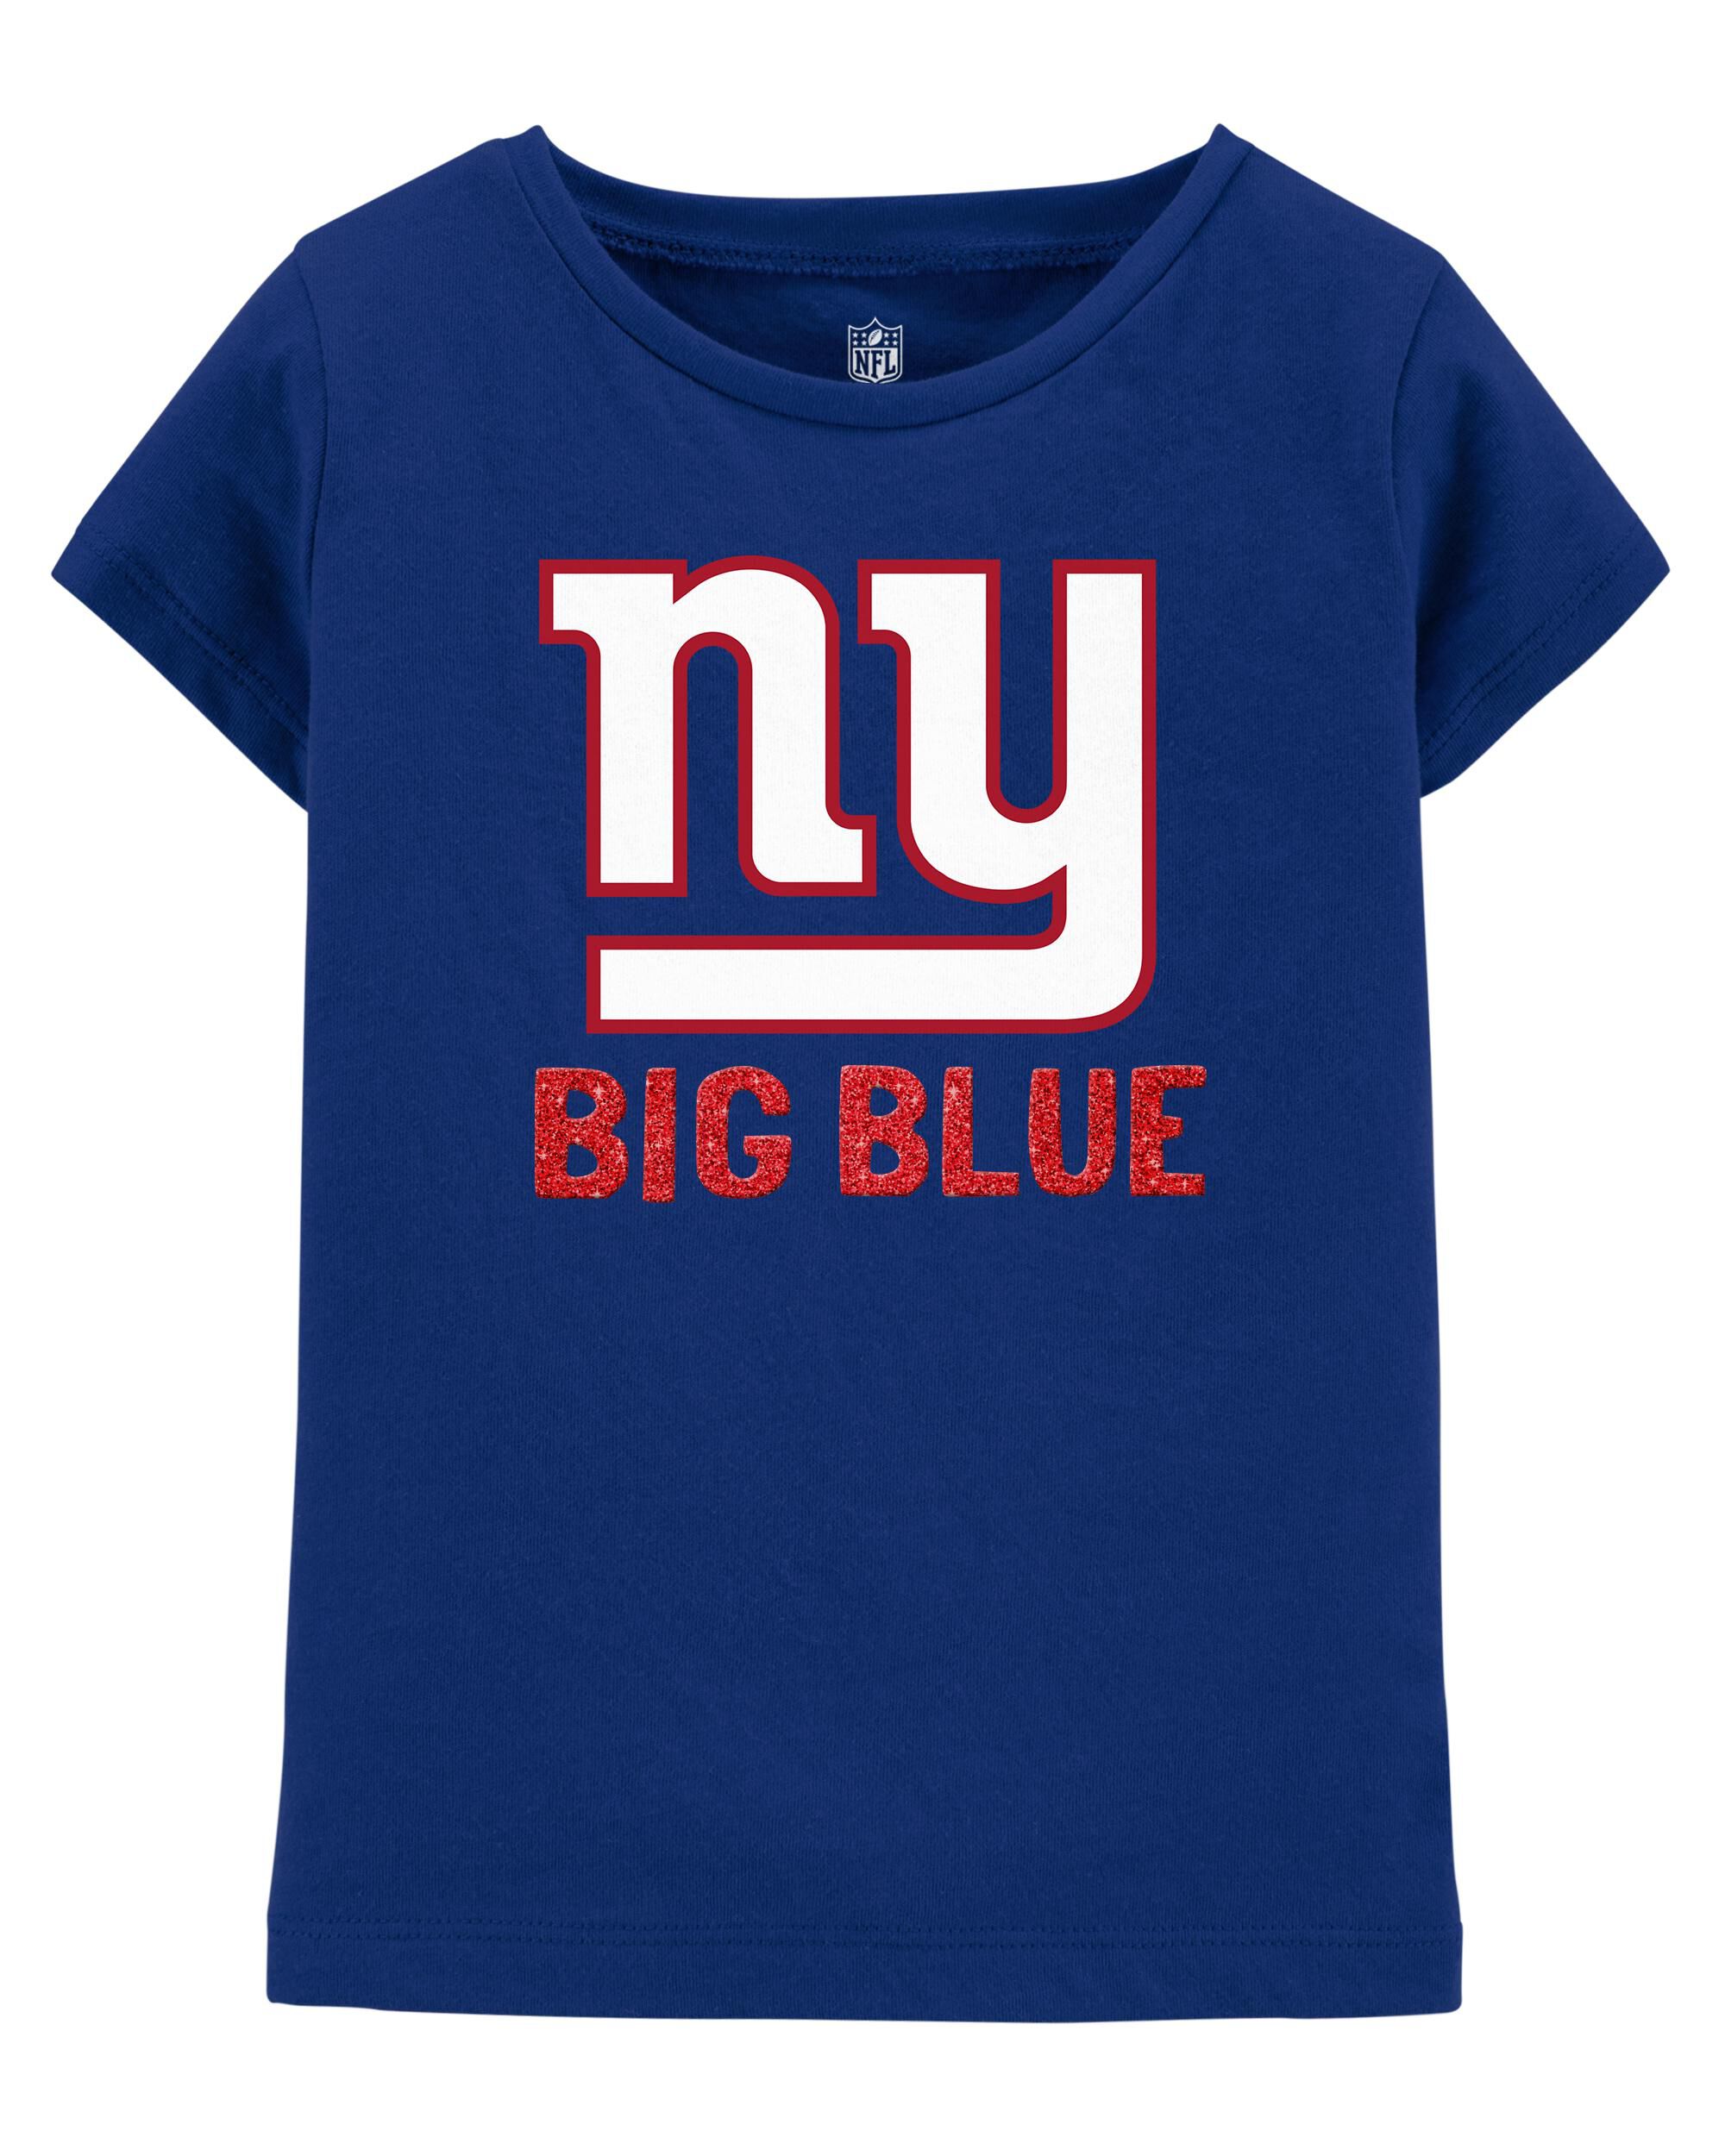 new york giants kids shirts